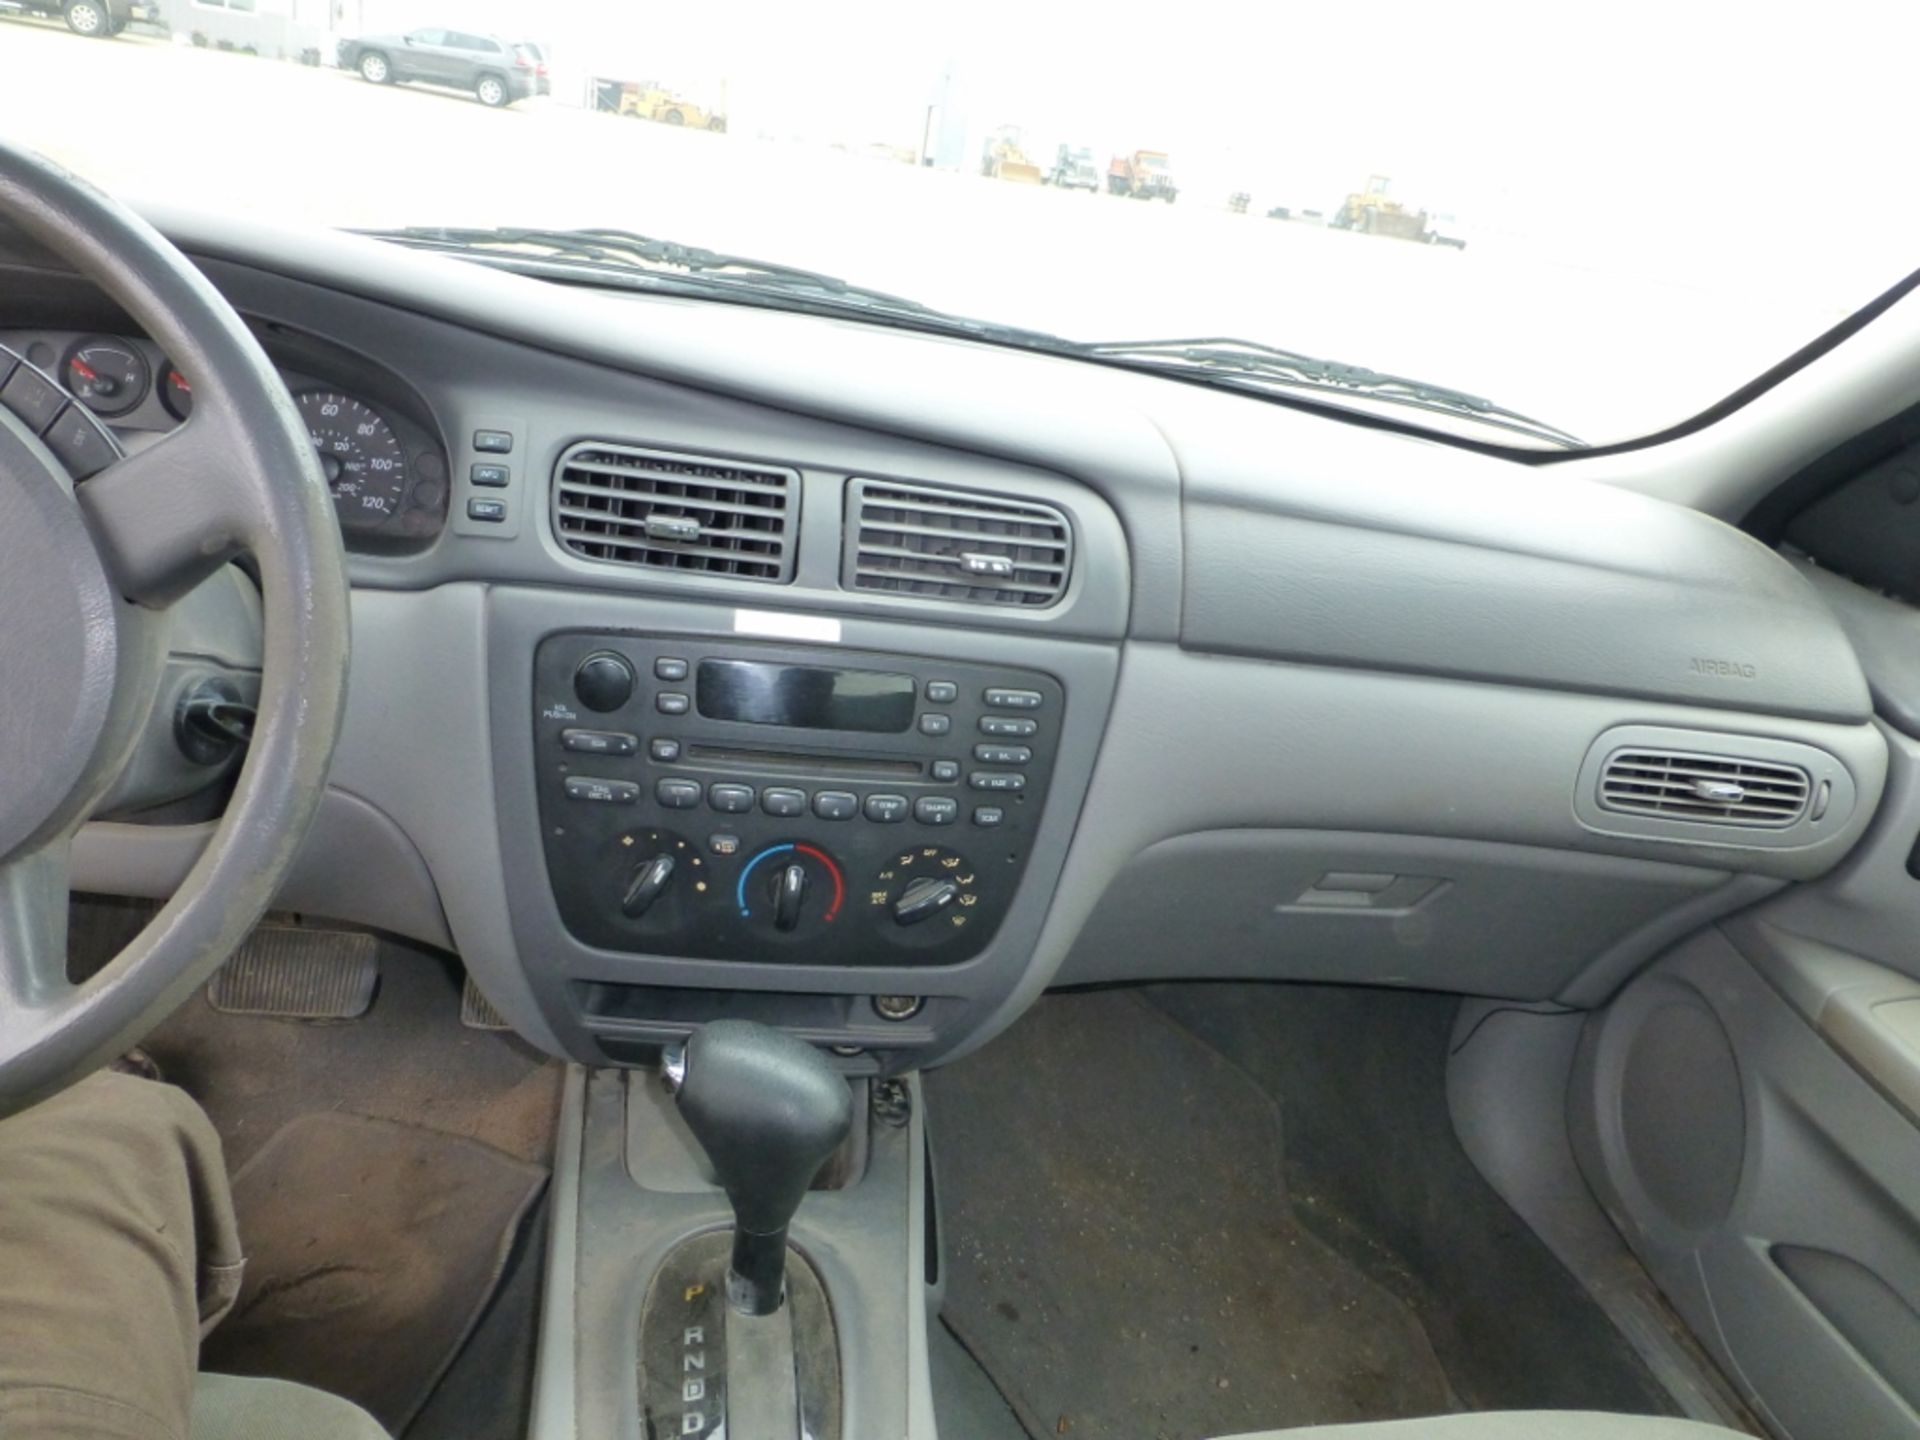 2007 Ford Taurus, 4 door, Sedan, Silver, automatic transmission, 245,506 miles, unverified. - Image 23 of 29